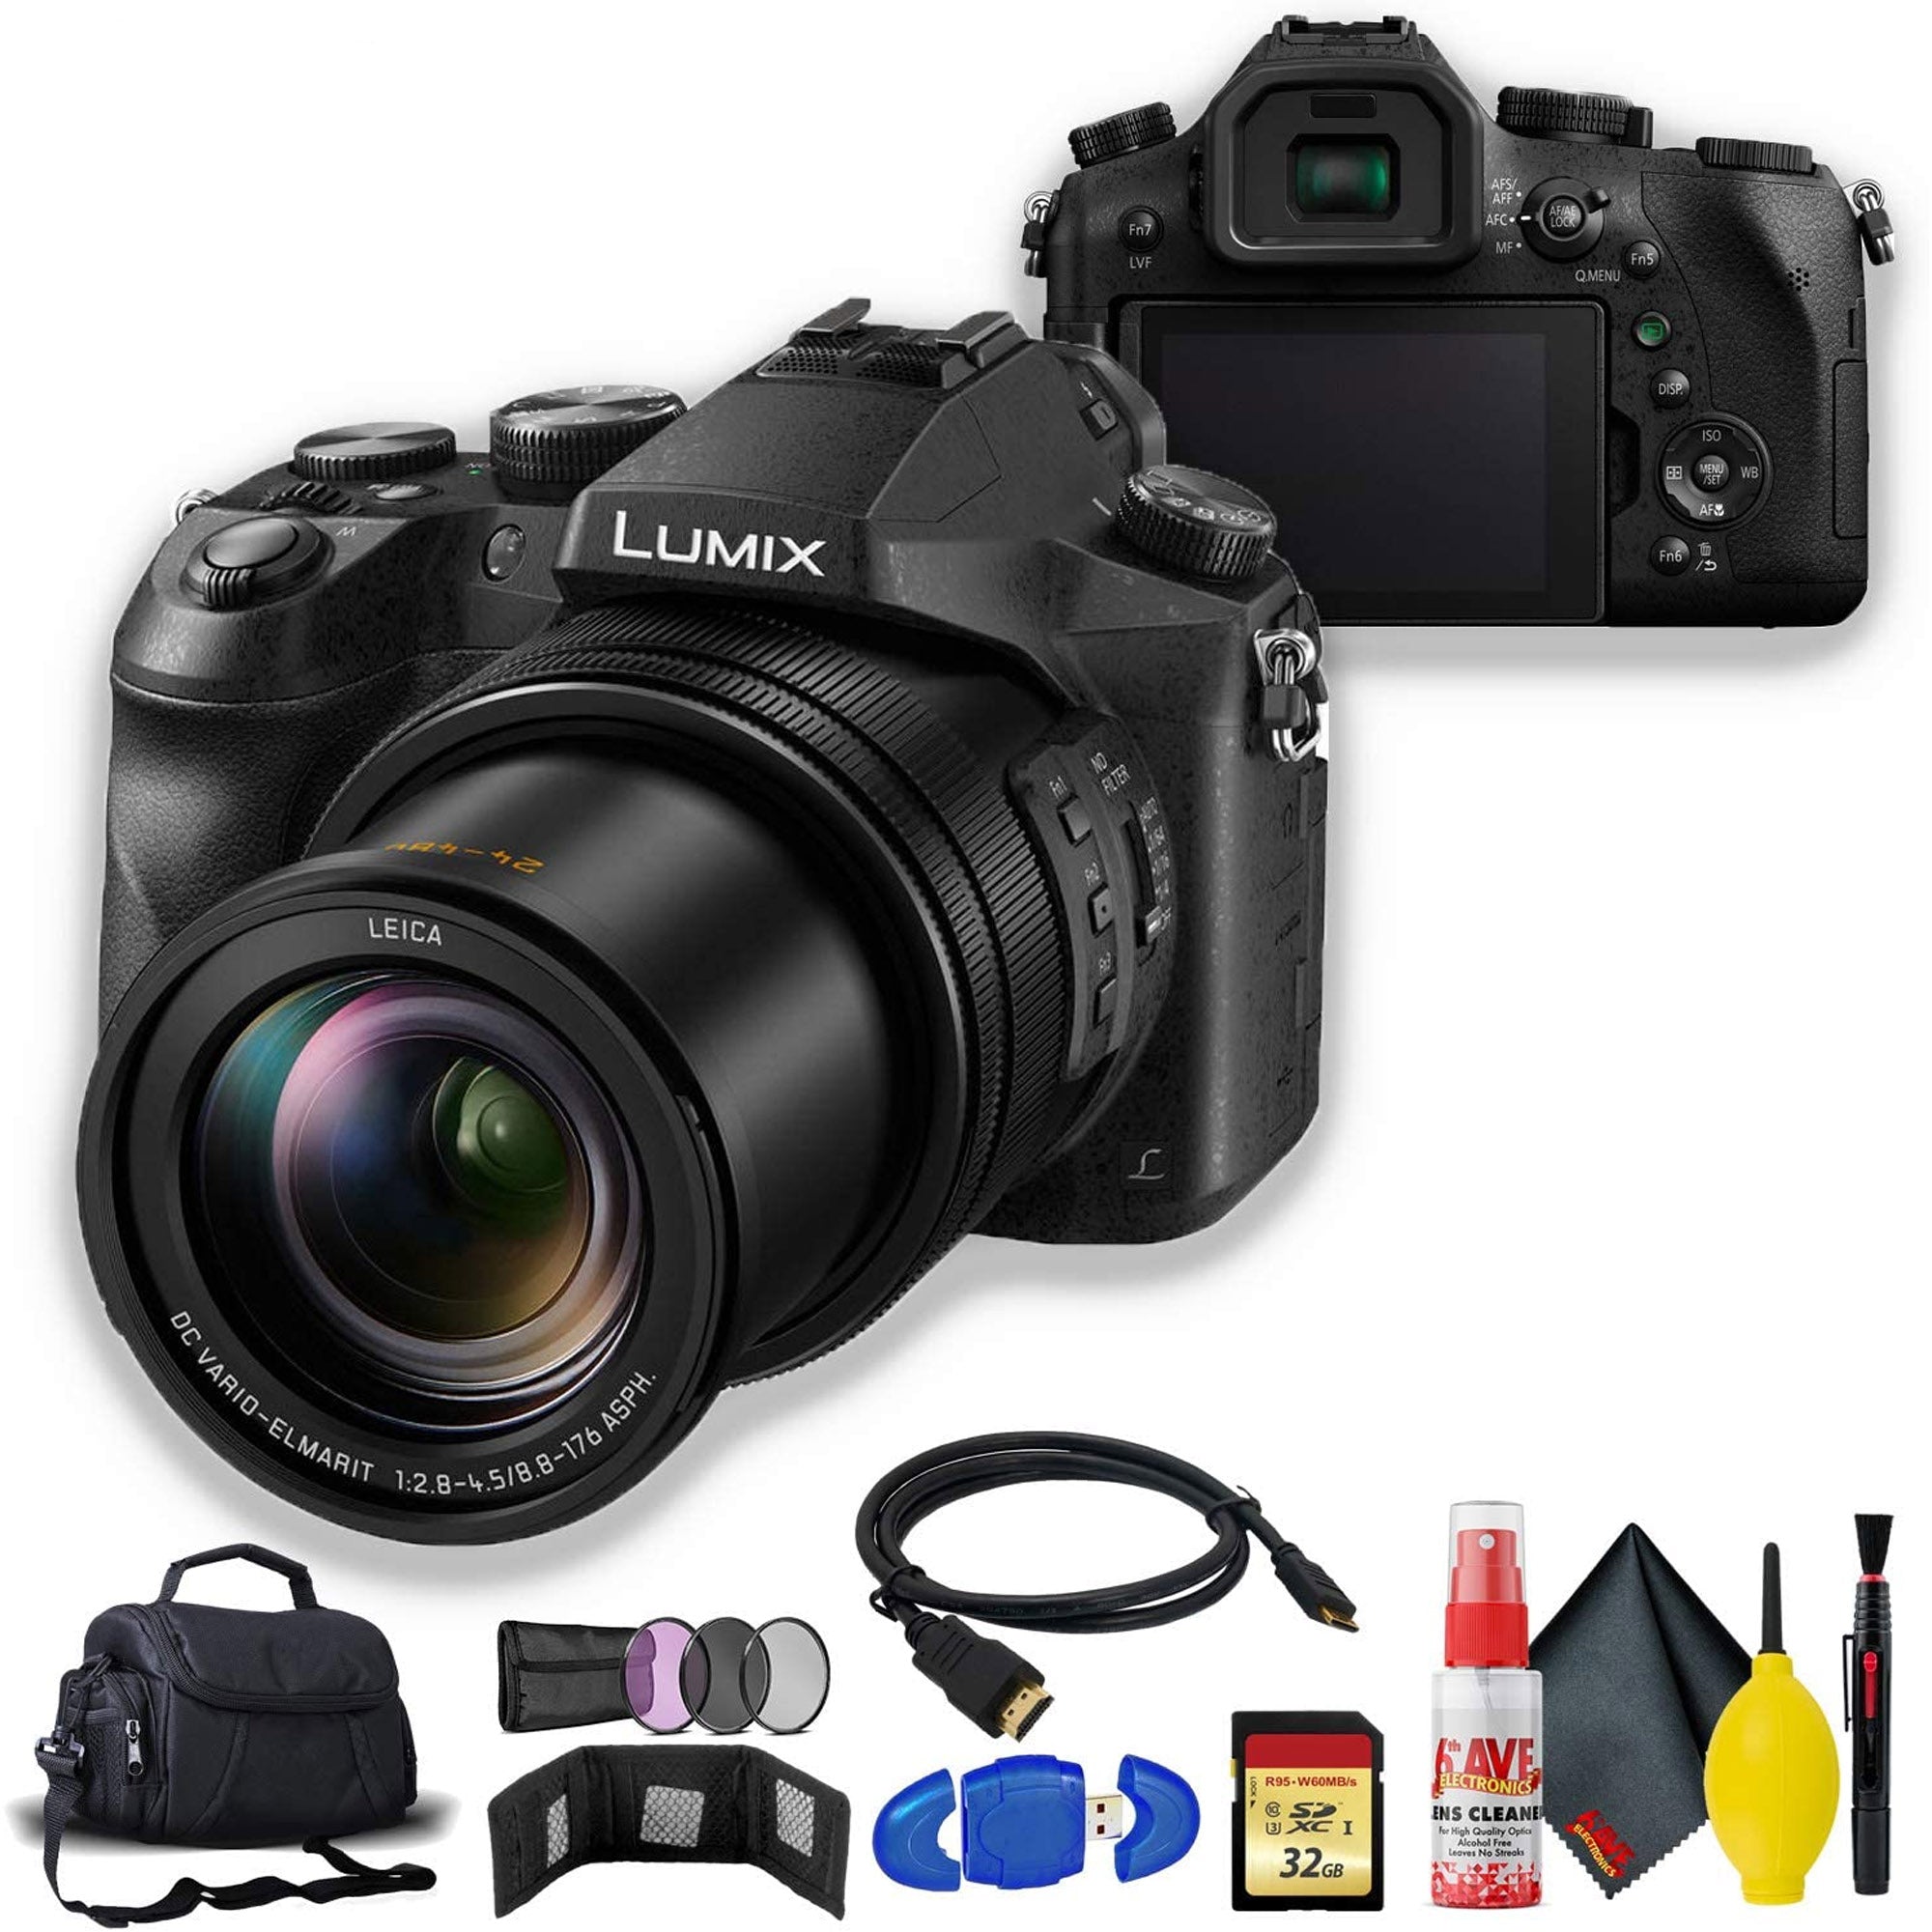 Panasonic Lumix DMC-FZ2500 Digital Camera with Carry Case Kit Bundle